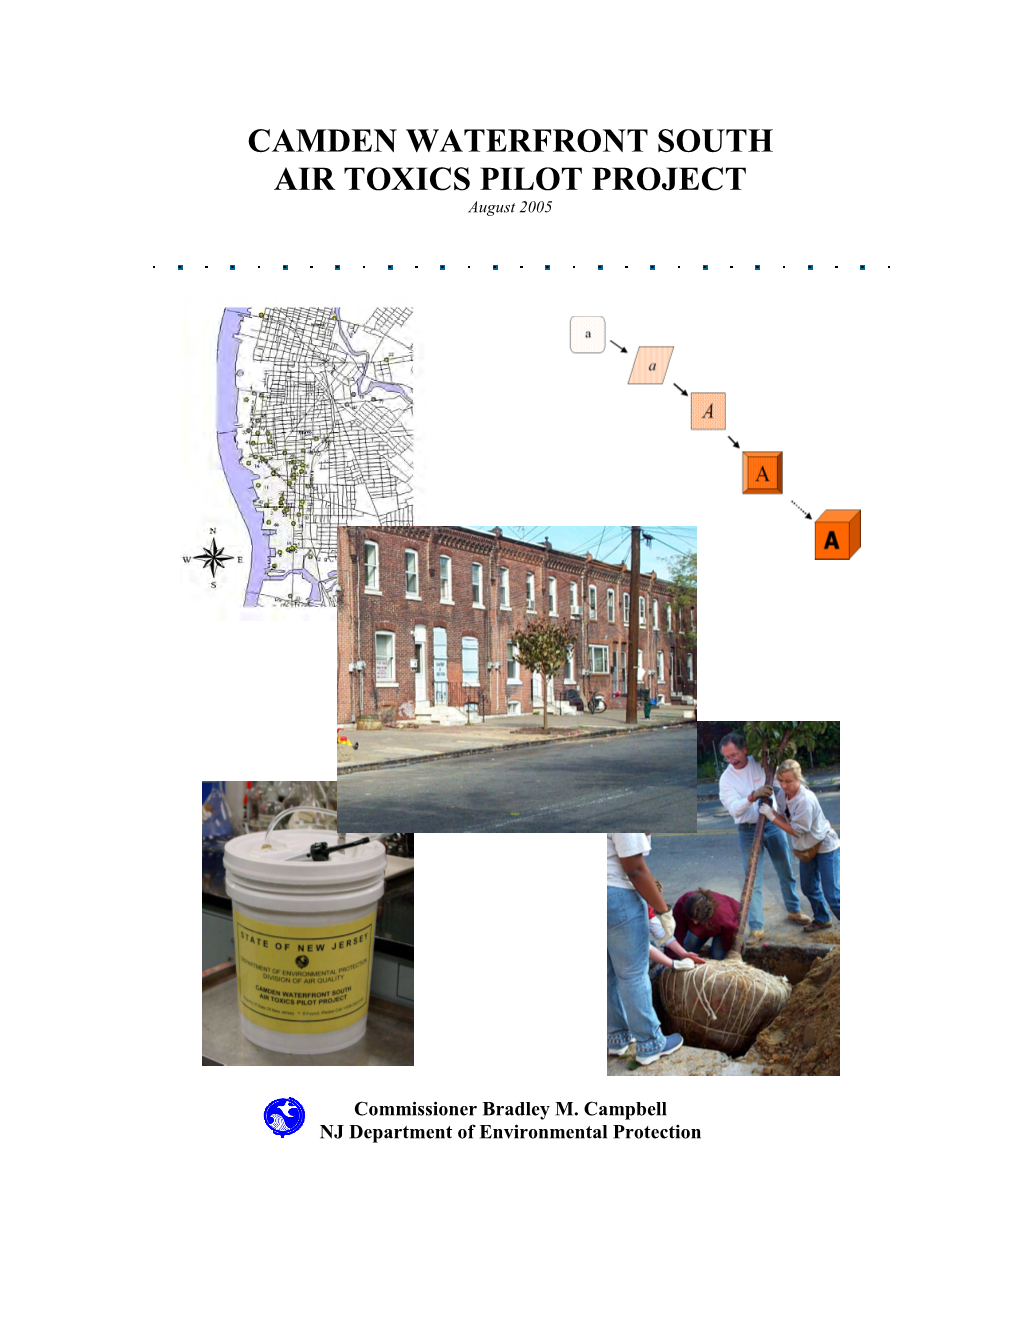 NJDEP-Camden Waterfront South Air Toxics Pilot Project-Final